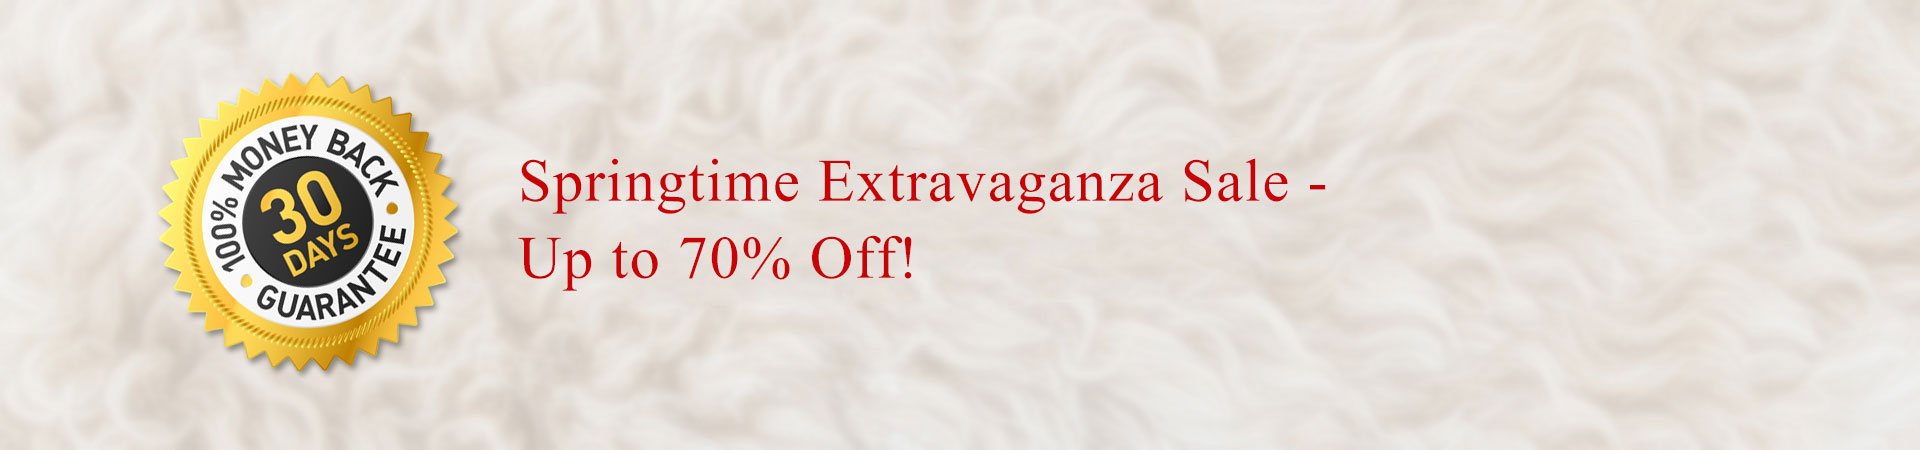 Springtime Extravaganza Sale - Up to 70% Off!